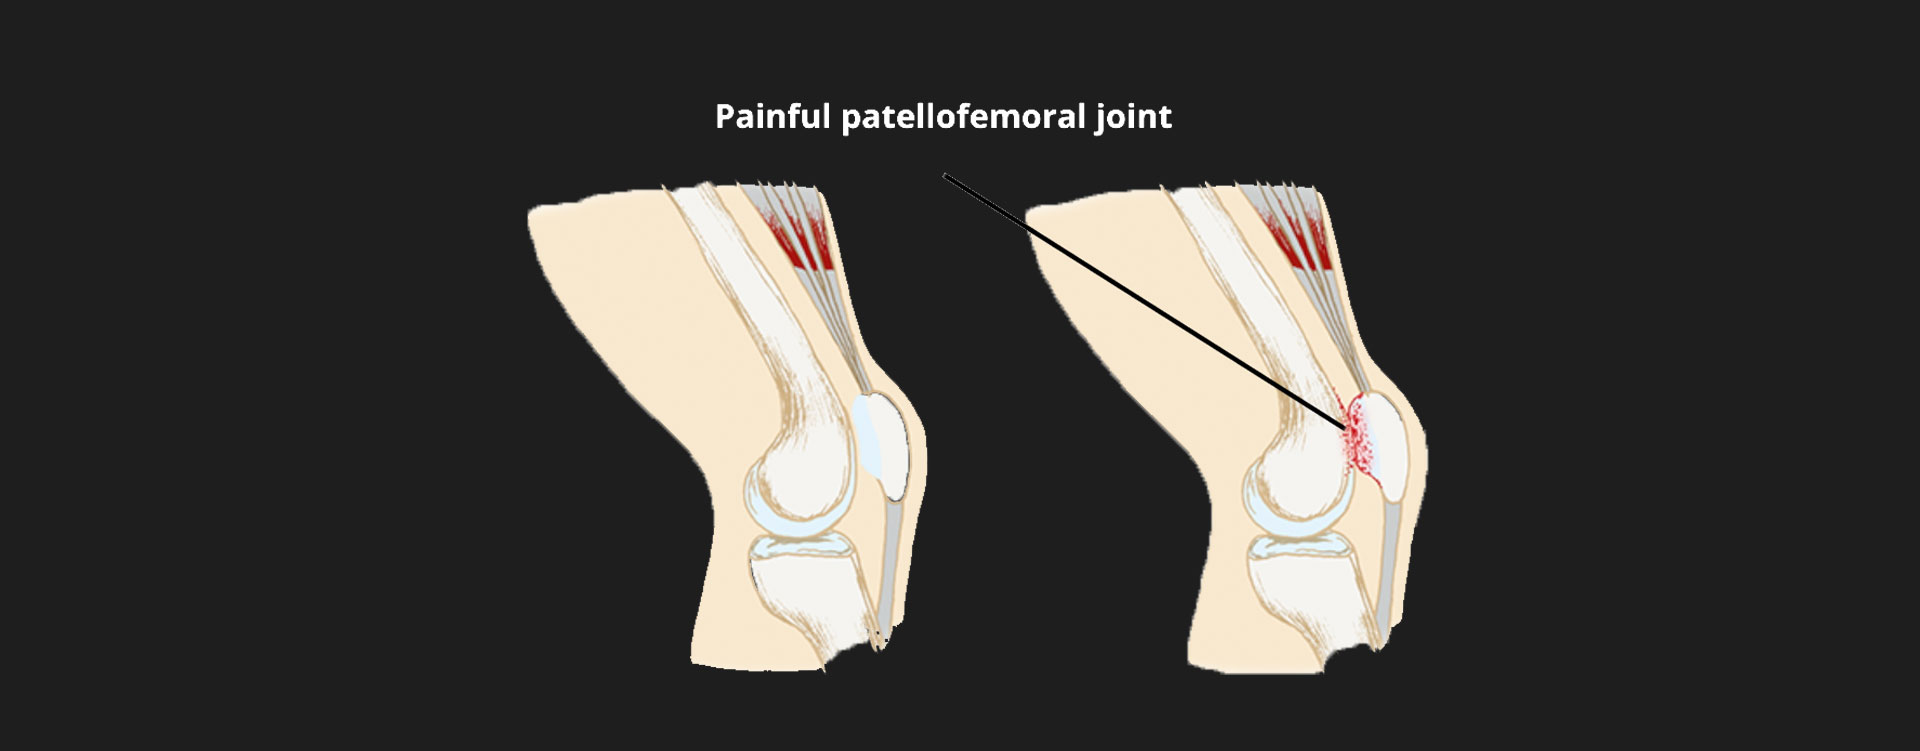 Patellofemoral-Pain